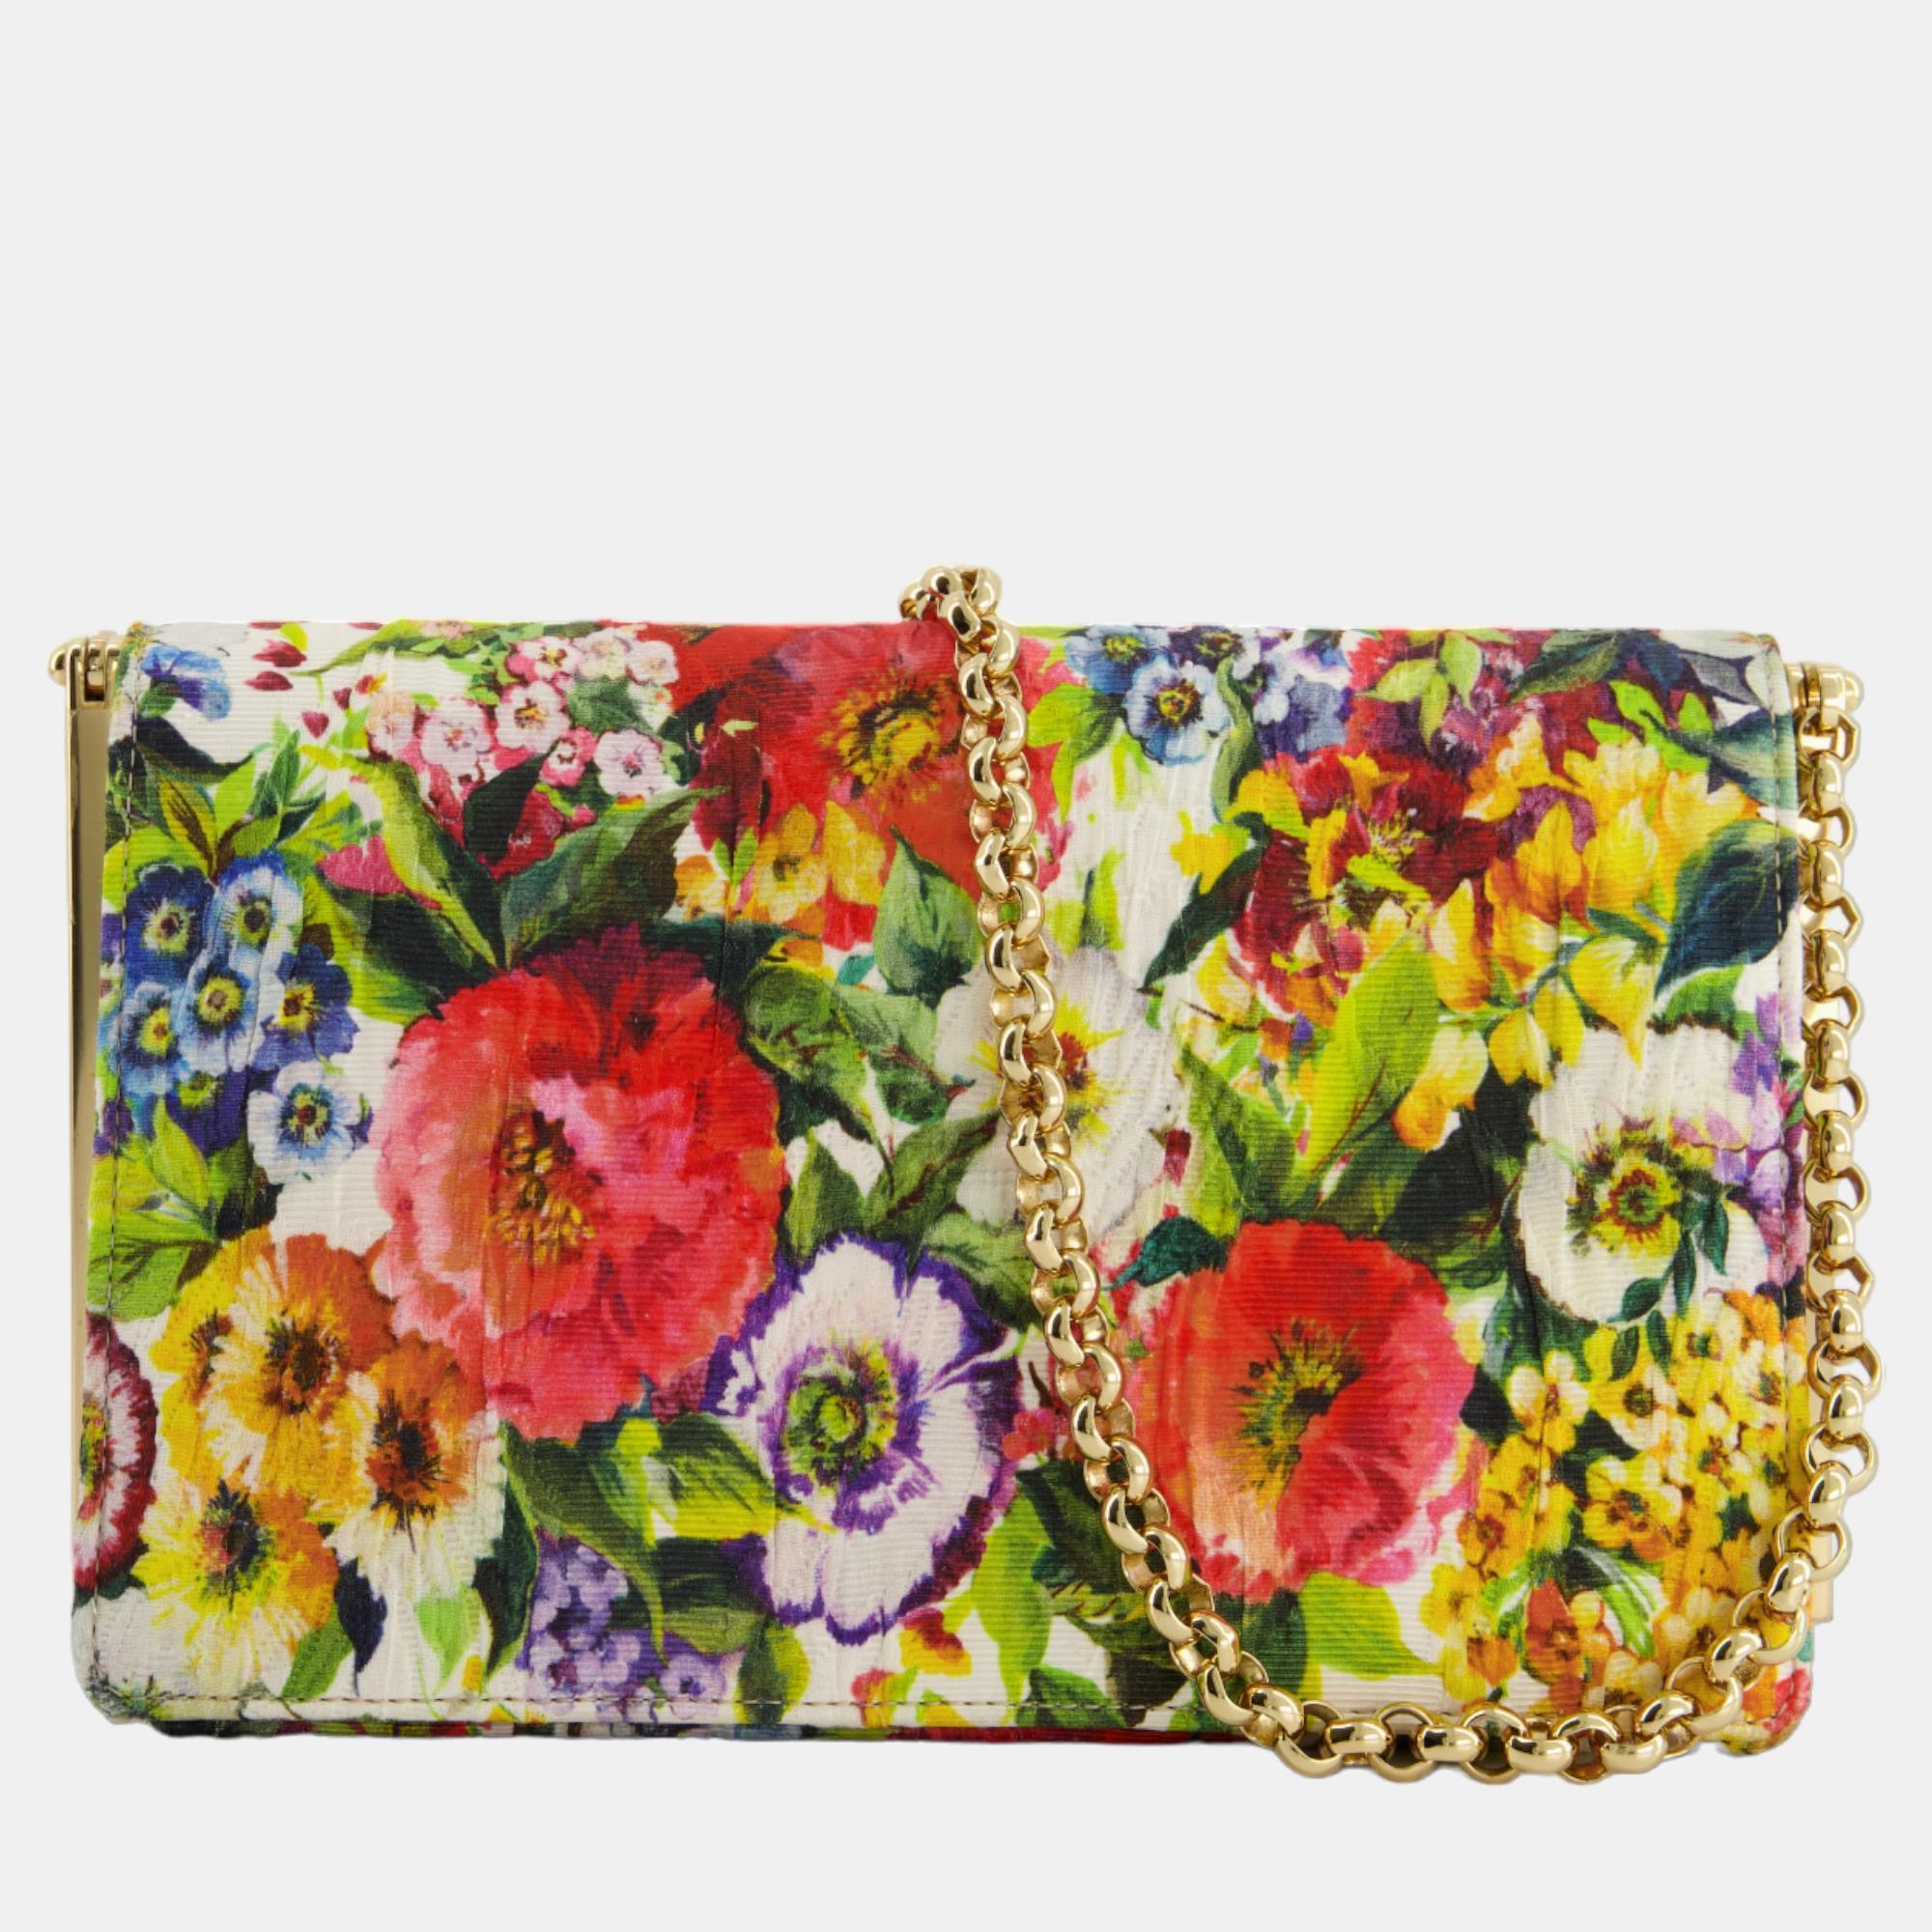 Dolce & gabbana multi-coloured floral shoulder bag with gold chain detail